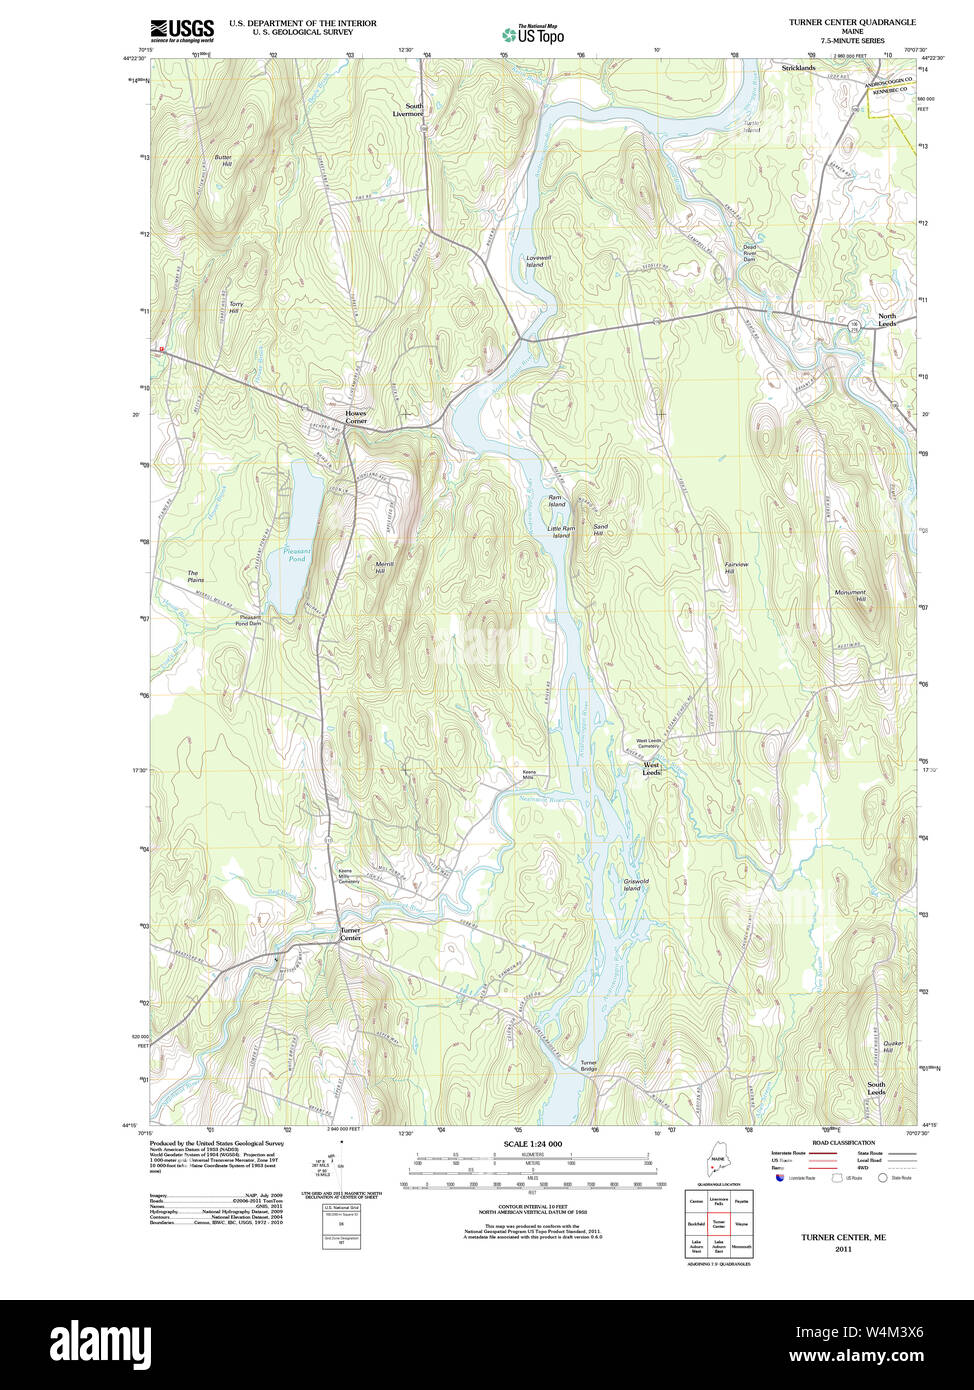 Maine Usgs Historical Map Turner Center 20110829 Tm Restoration W4M3X6 